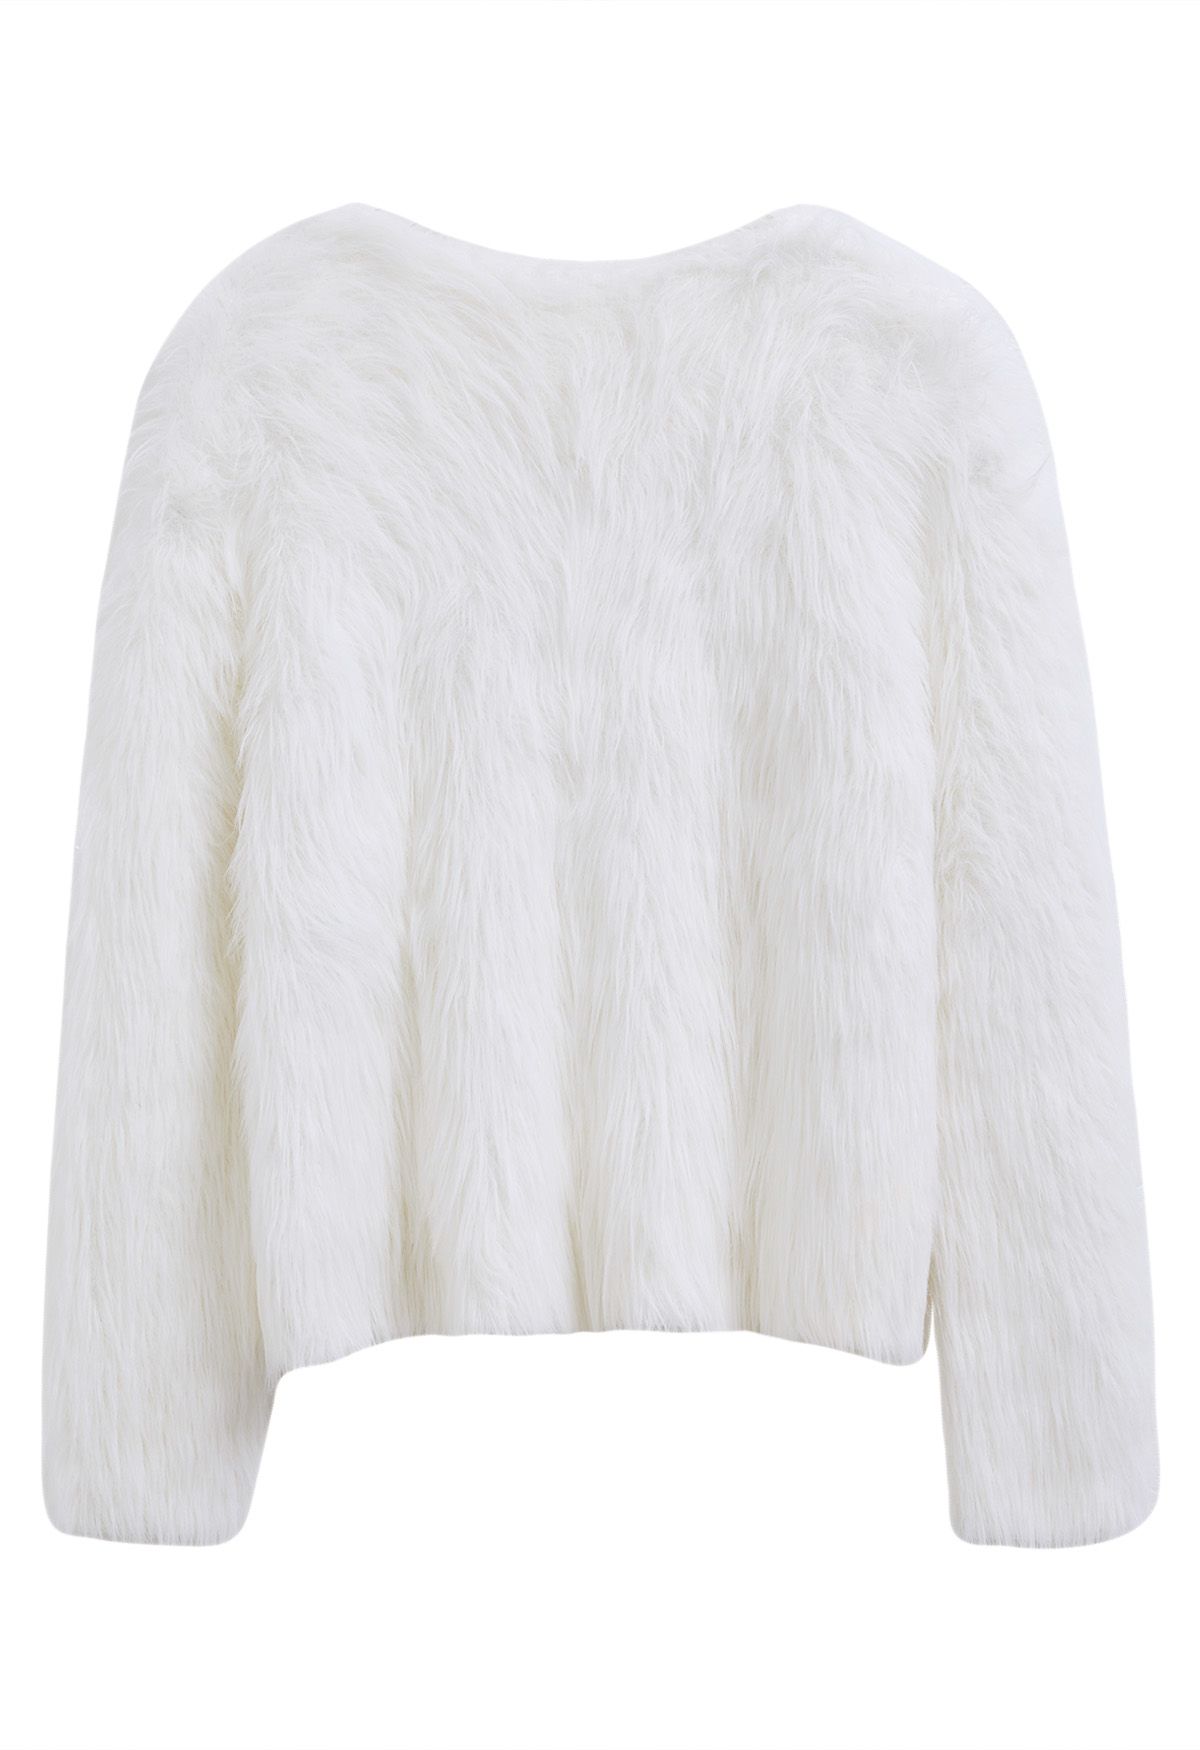 Delicate Button Trim Faux Fur Knit Coat in White